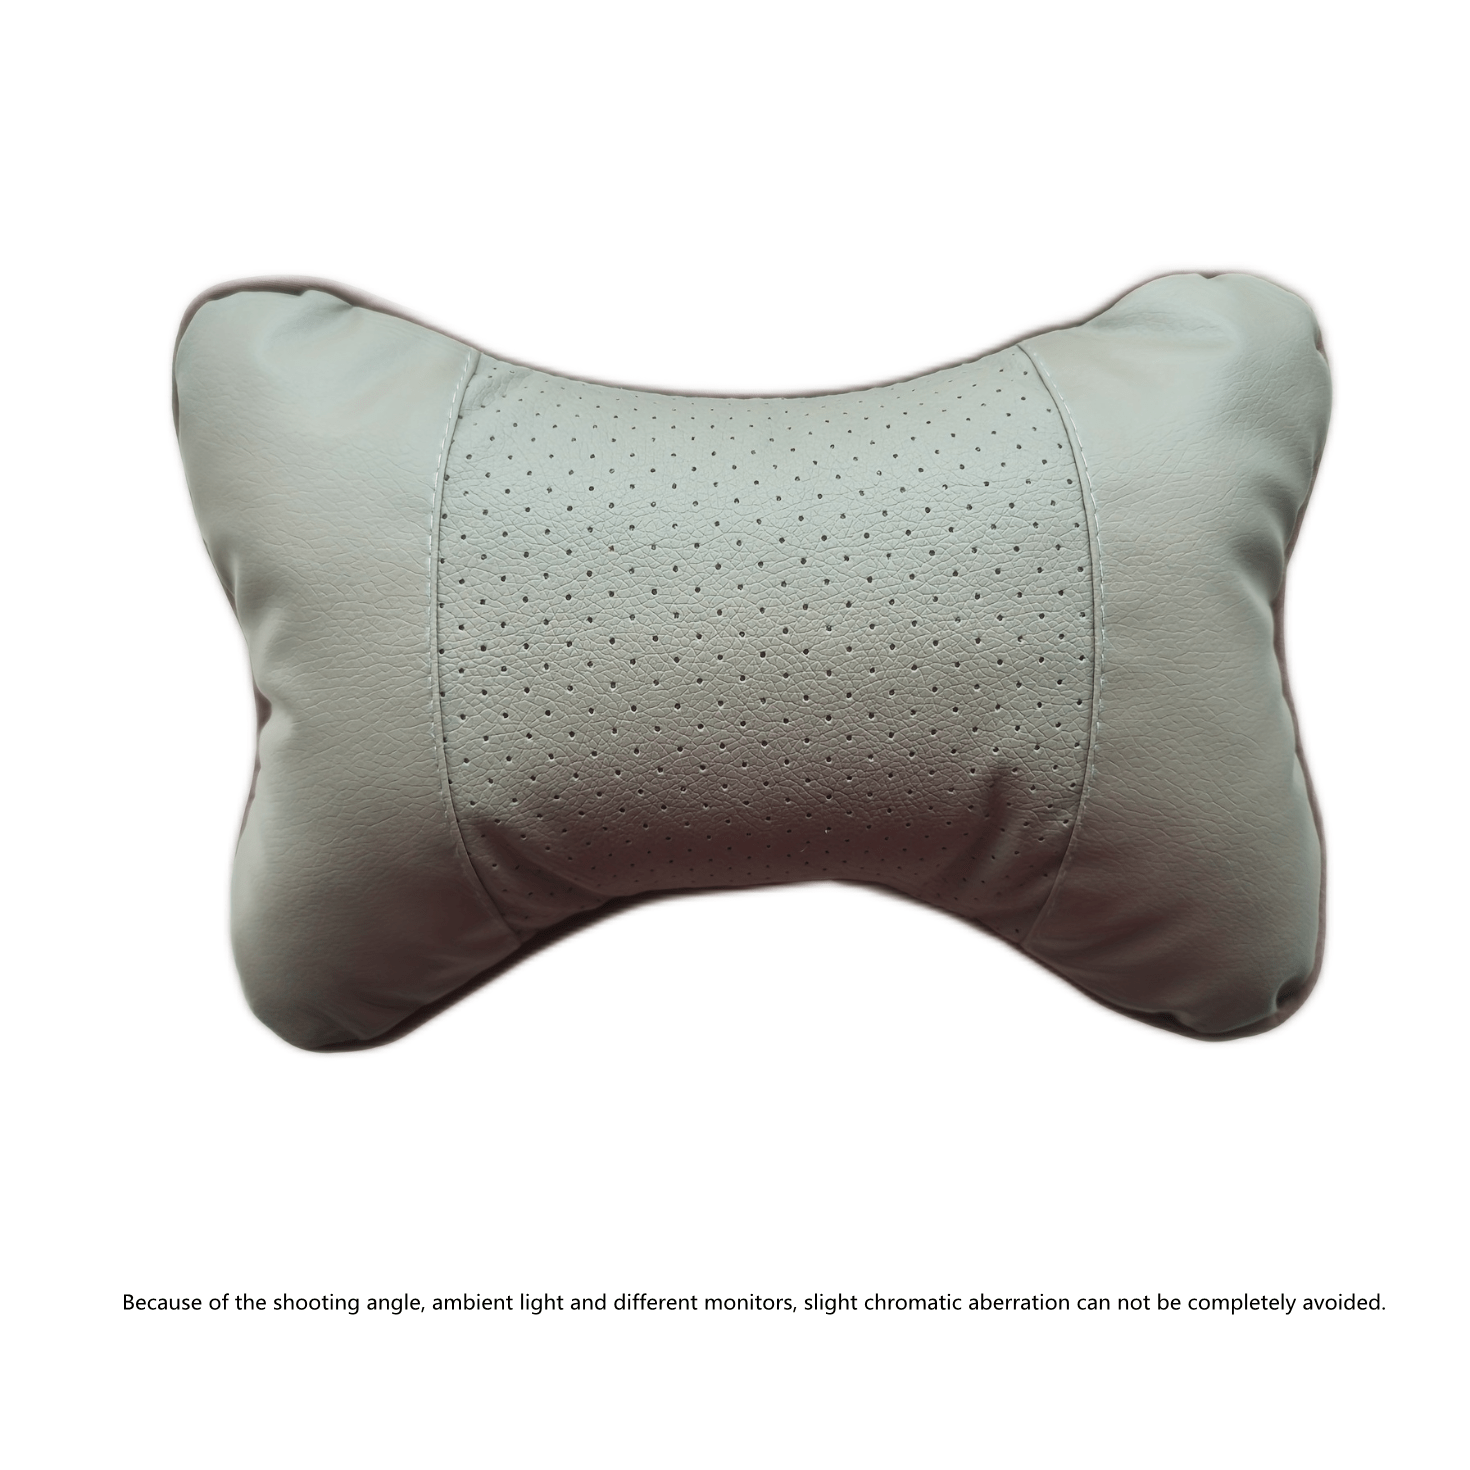 Neck Pillow Memory Foam For Car Auto Head Neck Rest Cushion